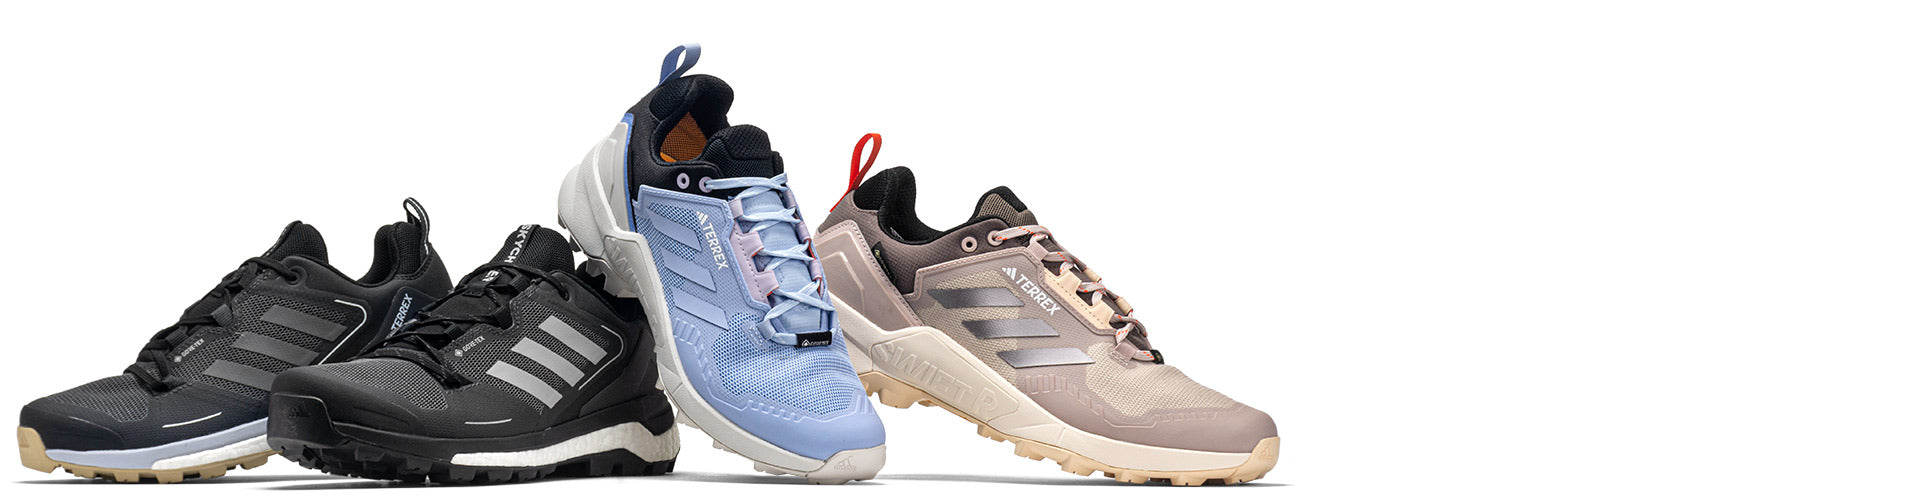 adidas terrex hiking shoes on white background swift r3 skychaser